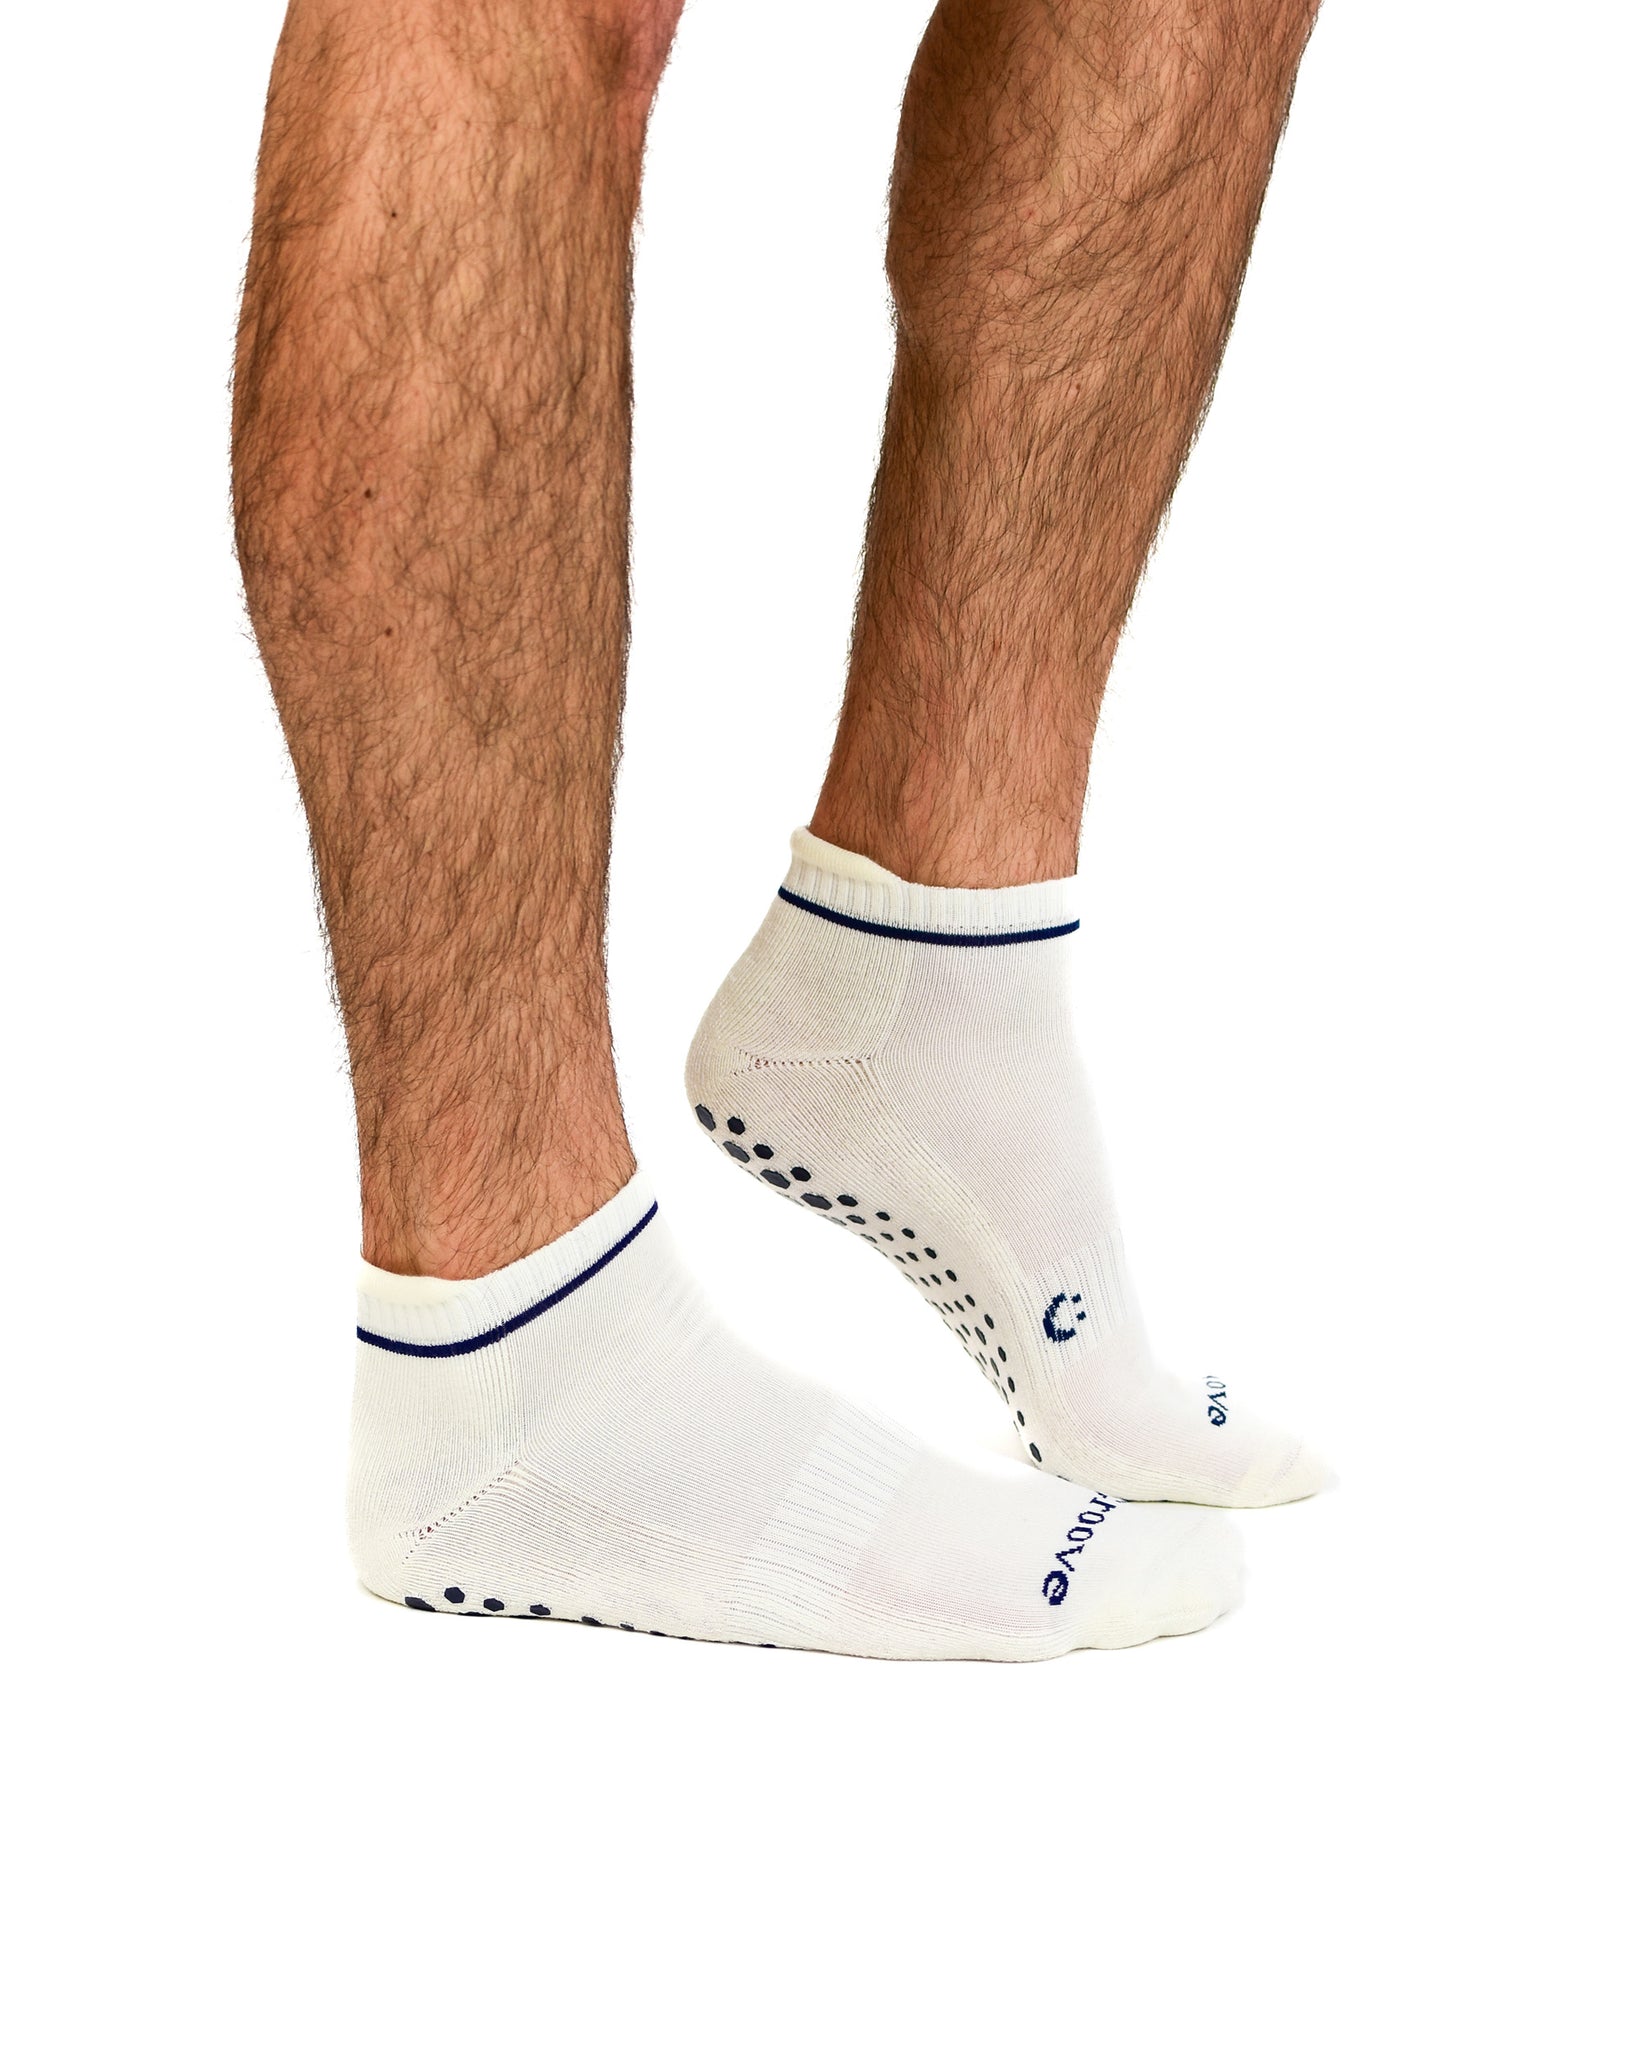 Grip Ankle Seamless Feel Sock 3 Pack (Adults) - Multi